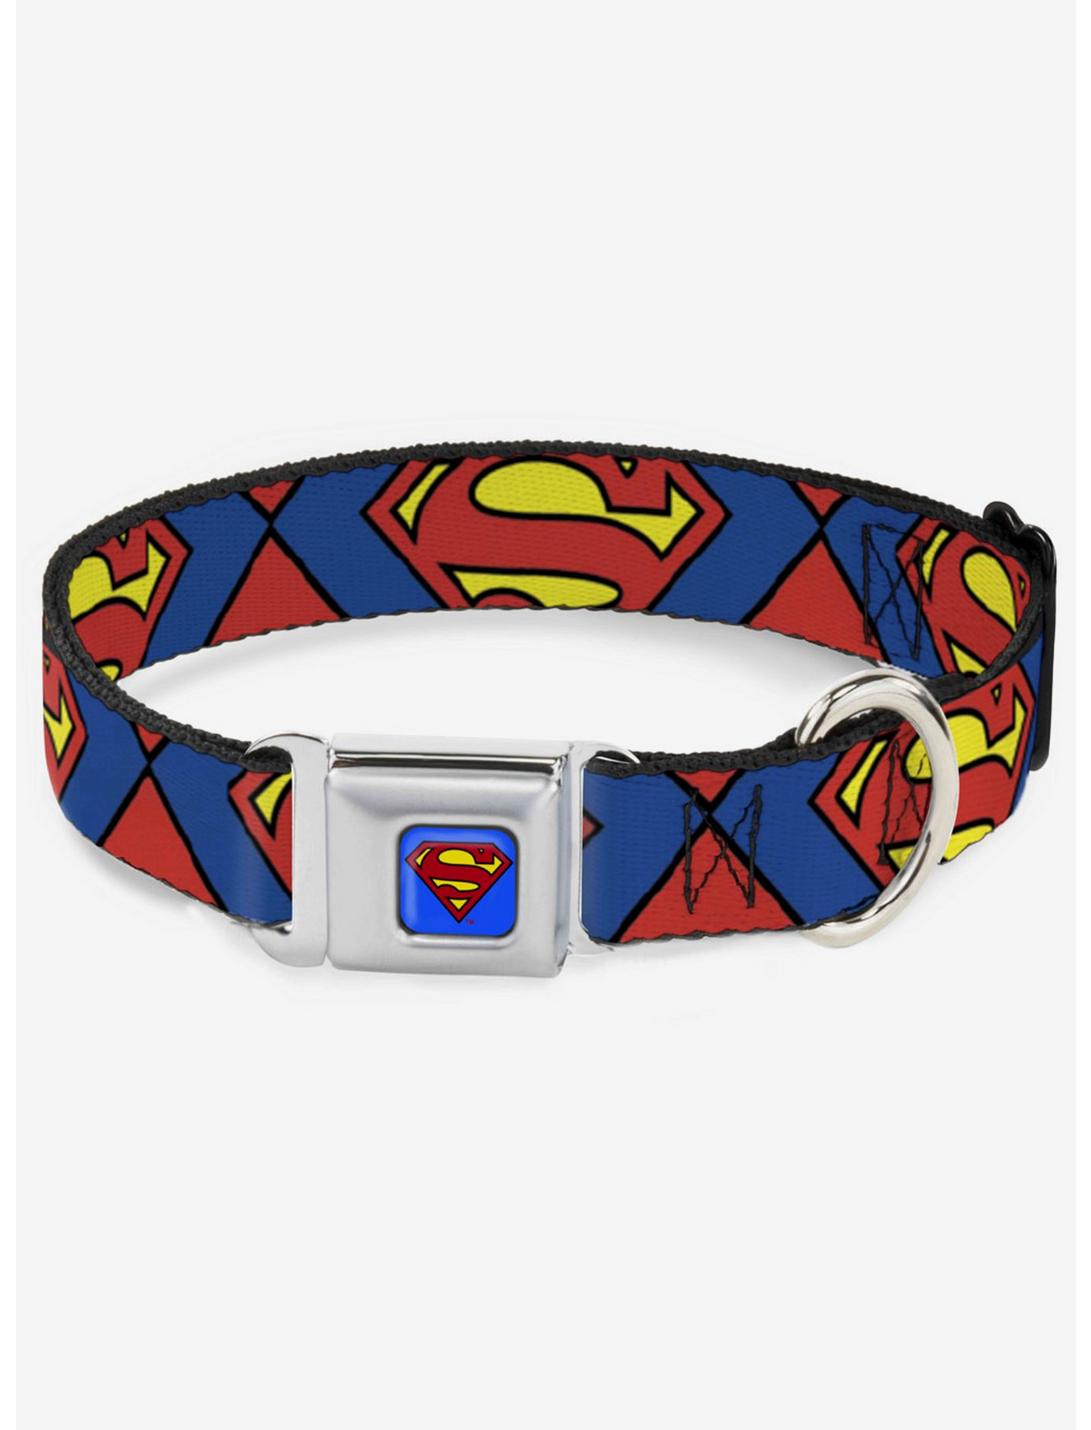 DC Comics Justice League Superman Shield Close Up Blue Red Yellow Seatbelt Buckle Dog Collar, BLUE, hi-res